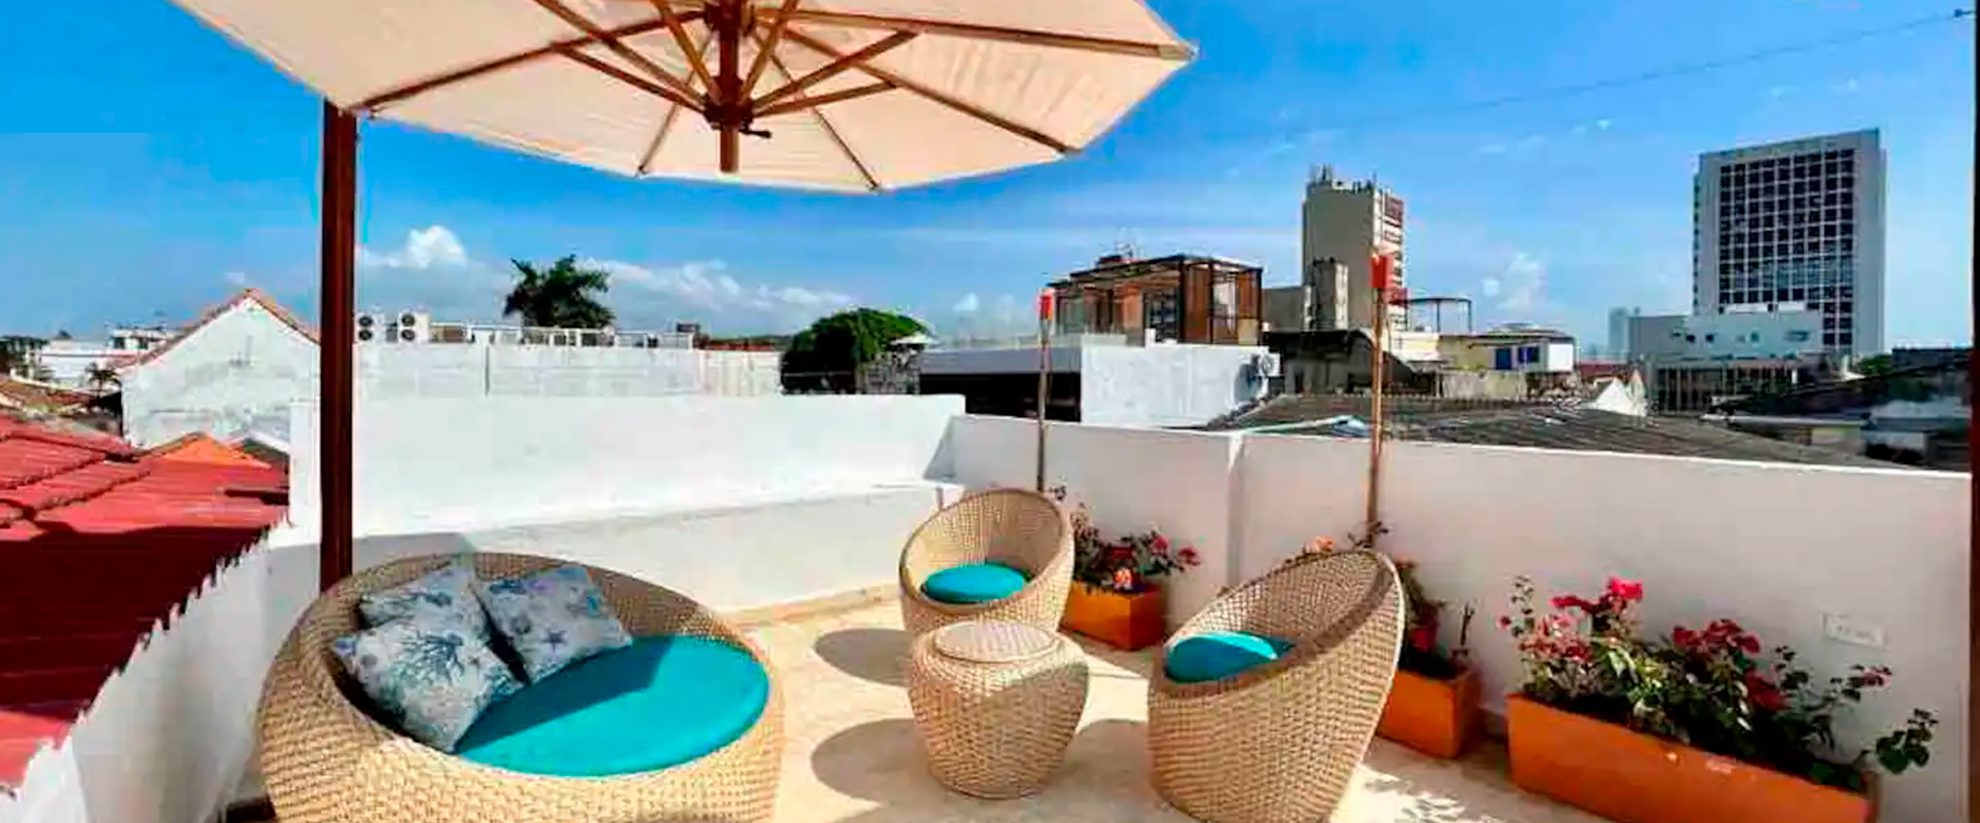 Roof House - Classy Cartagena